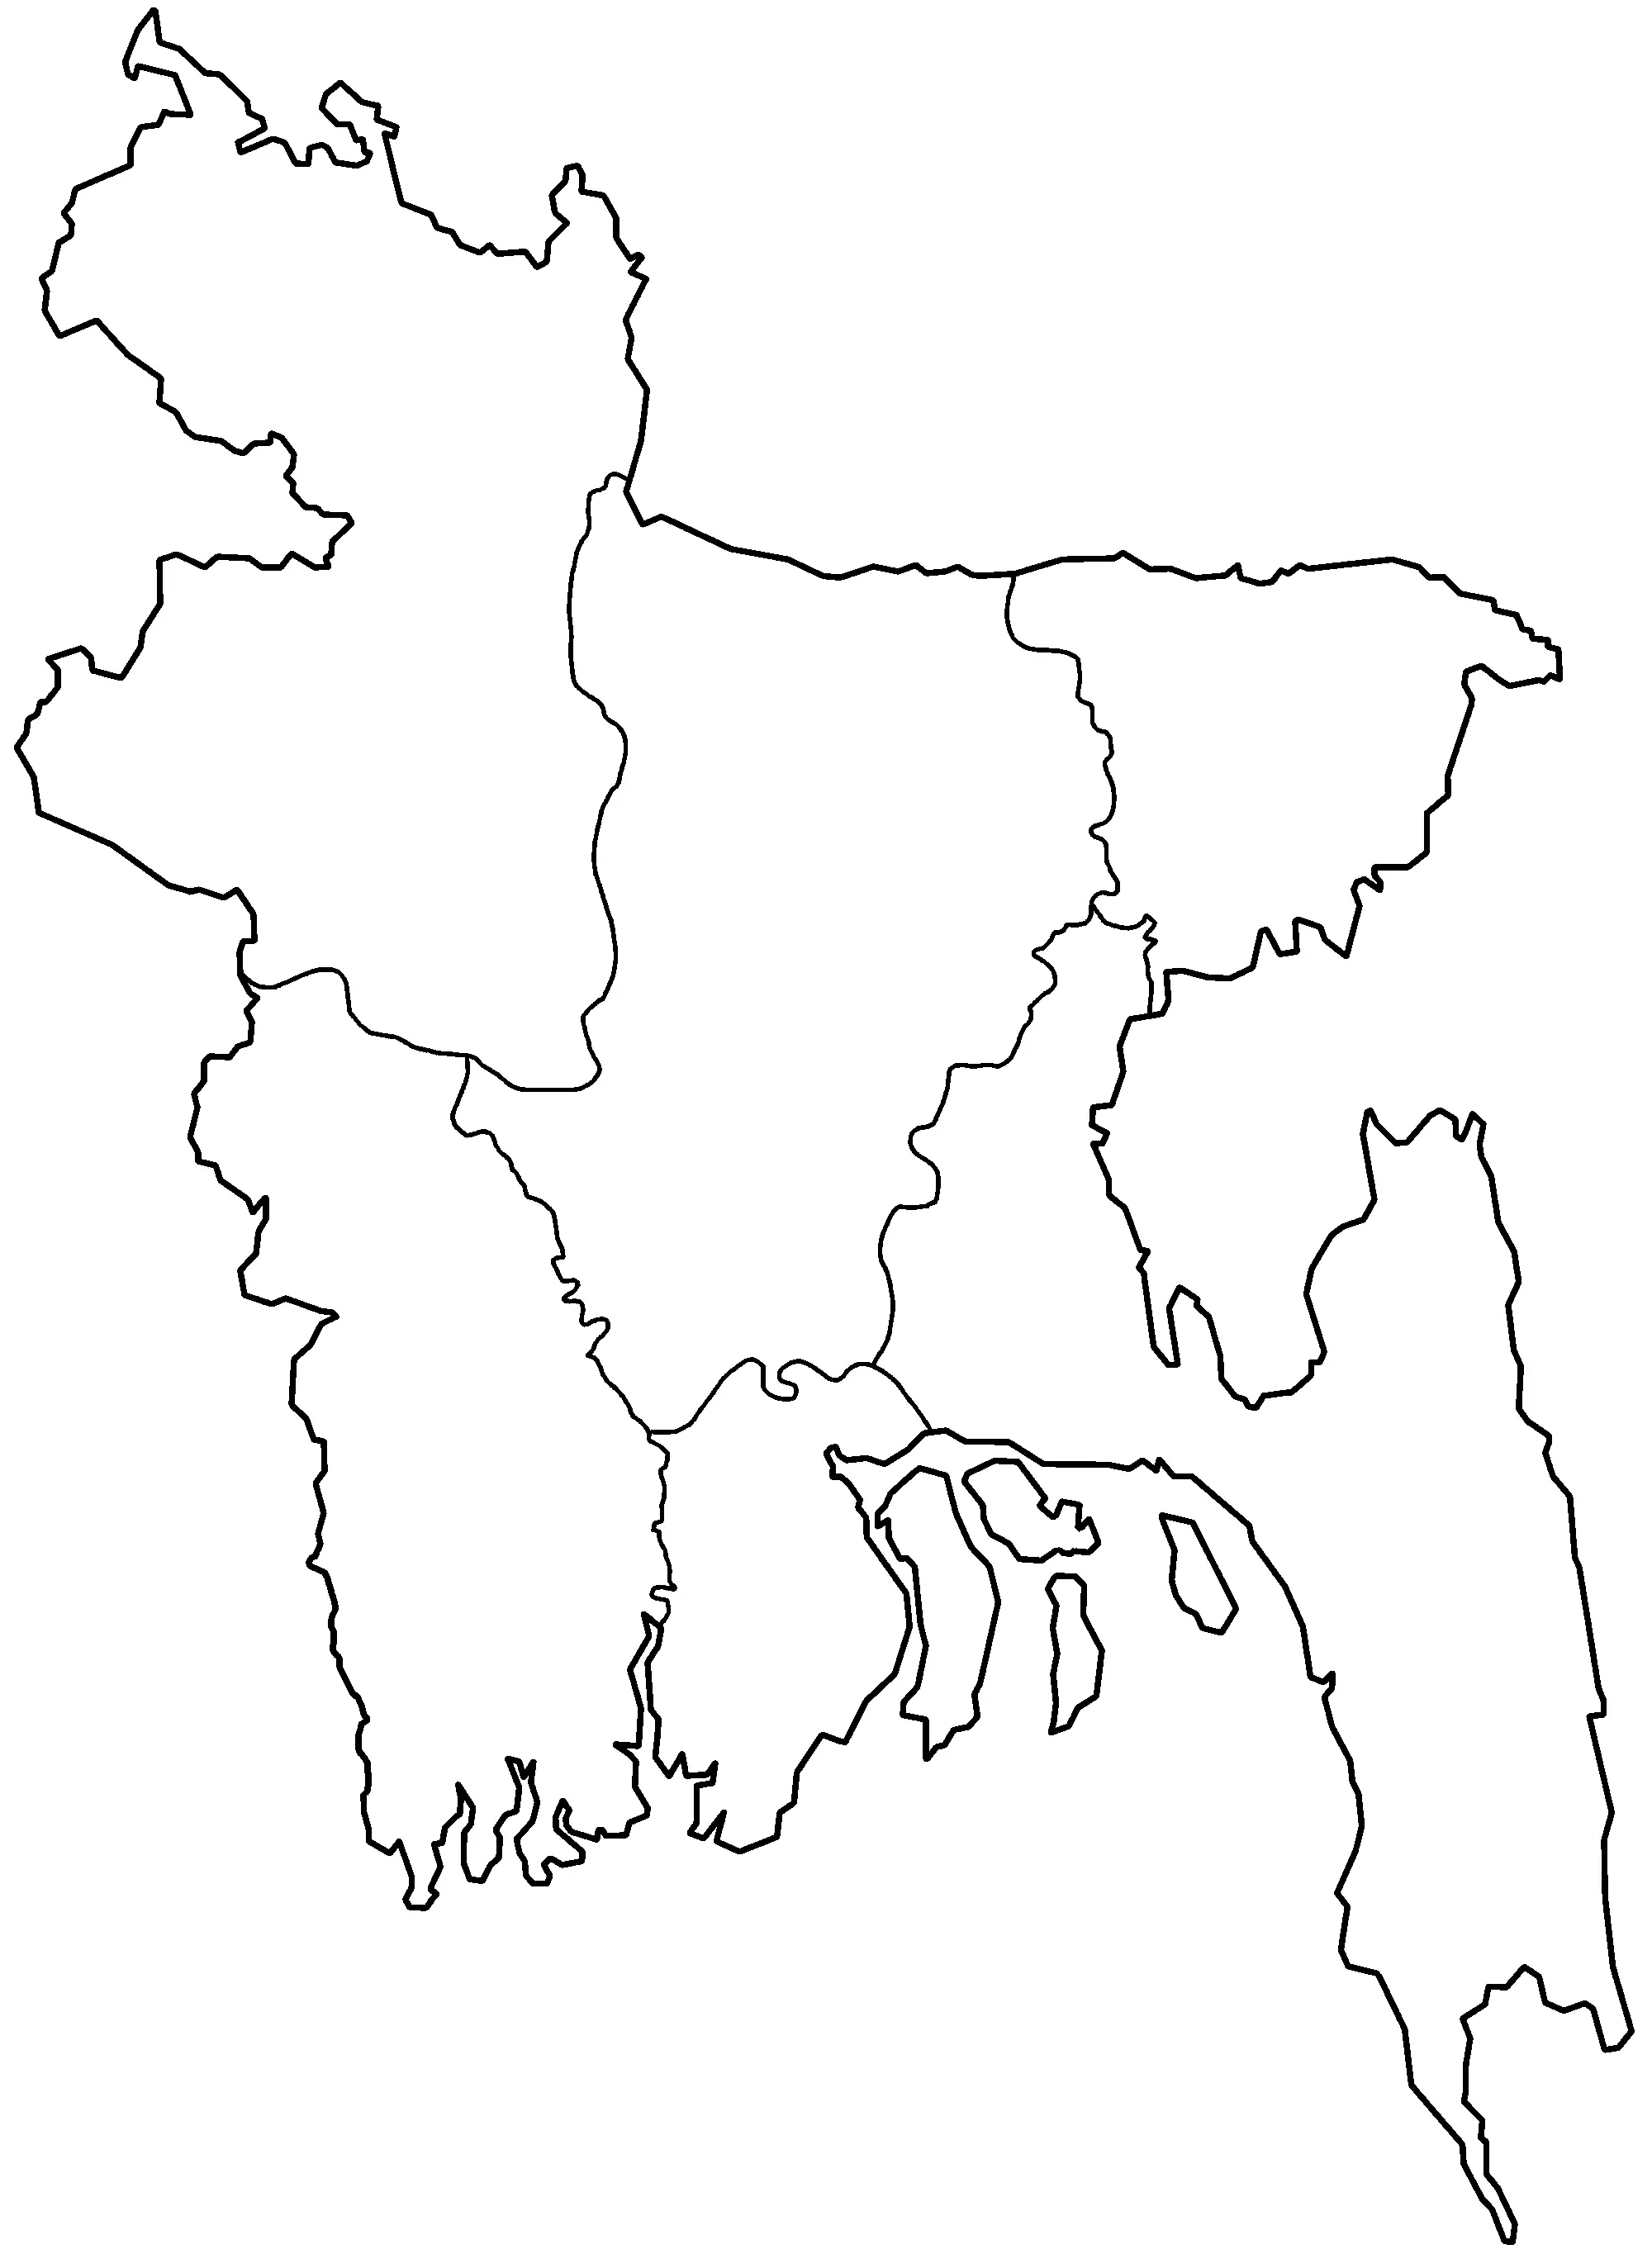 Bangladesh Divisions Blank • Mapsof.net